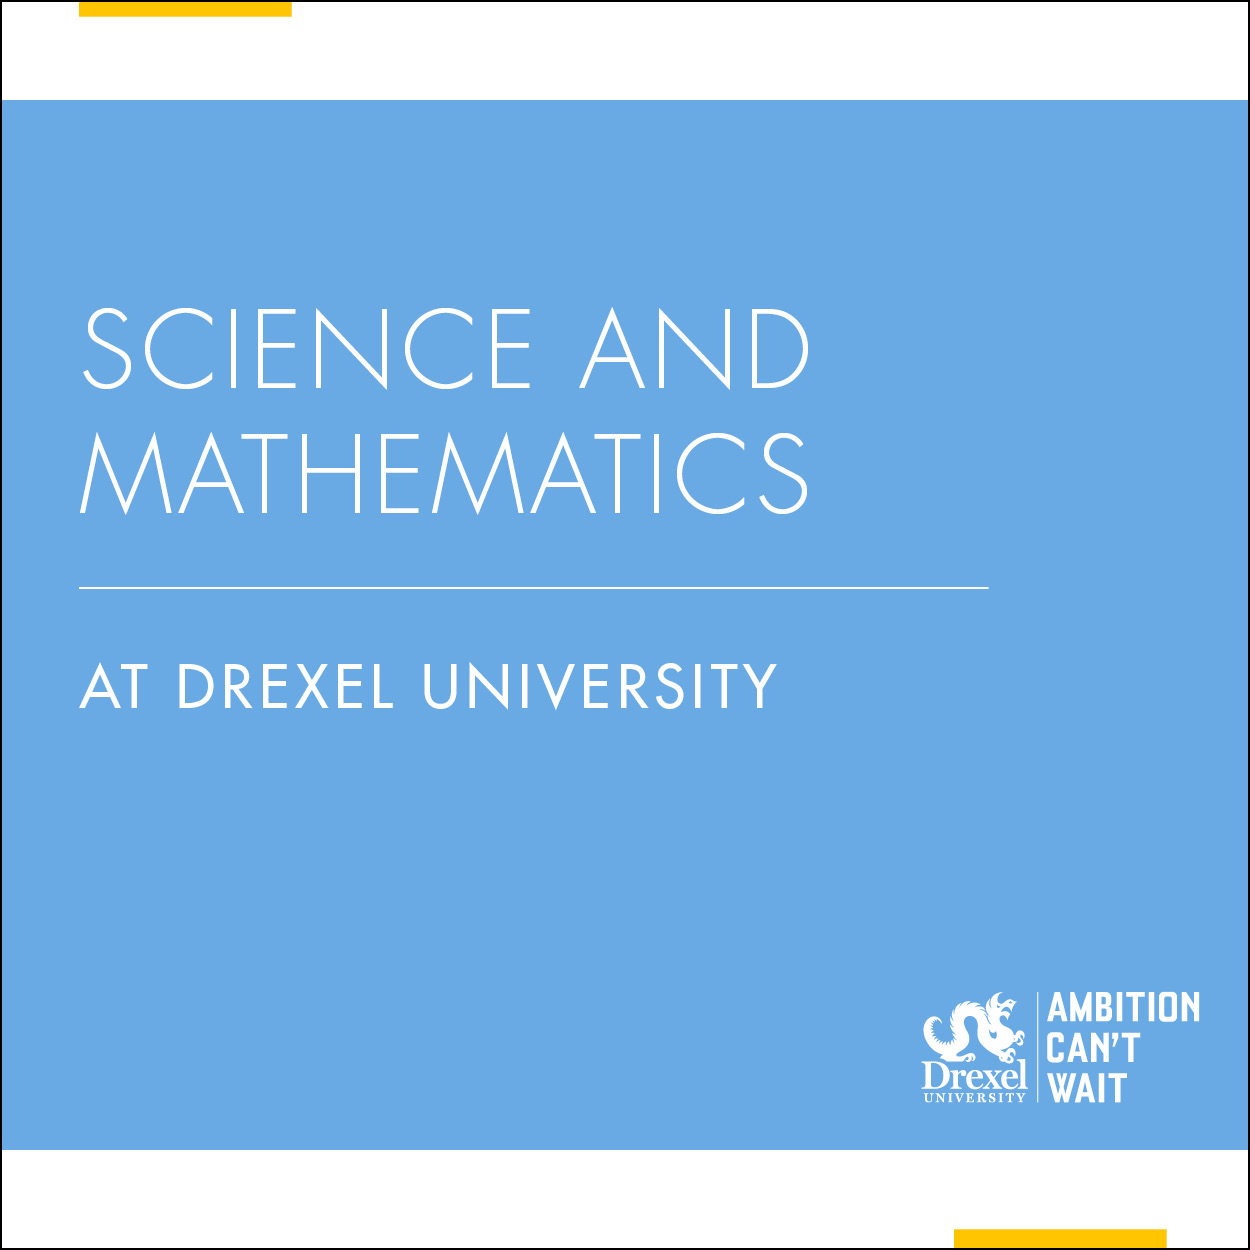 Sciences and Mathematics at Drexel University